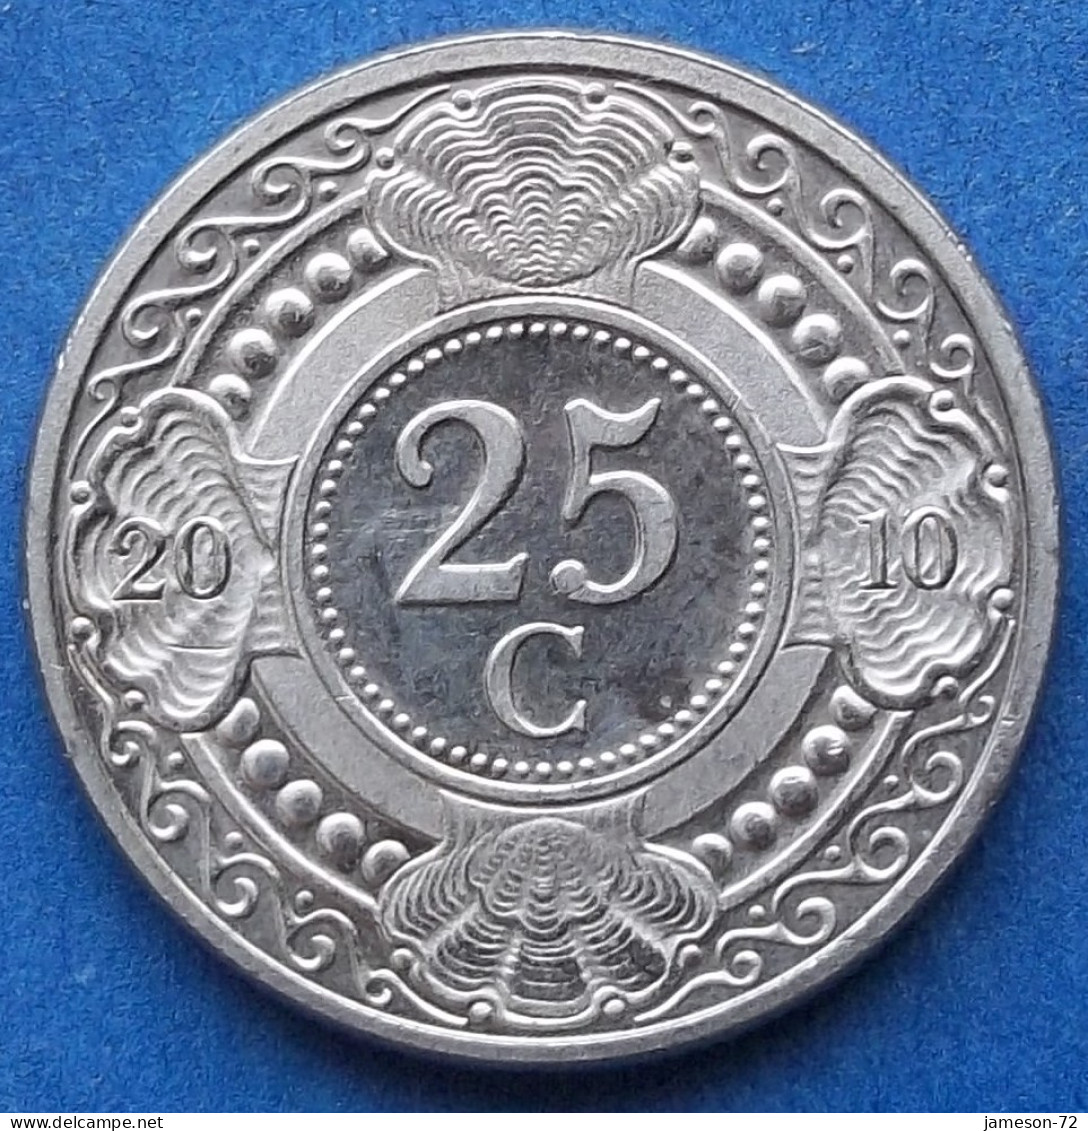 NETHERLANDS ANTILLES- 25 cents 2010 "Orange Blossom" KM# 35 Beatrix (1980-2013) - Edelweiss Coins